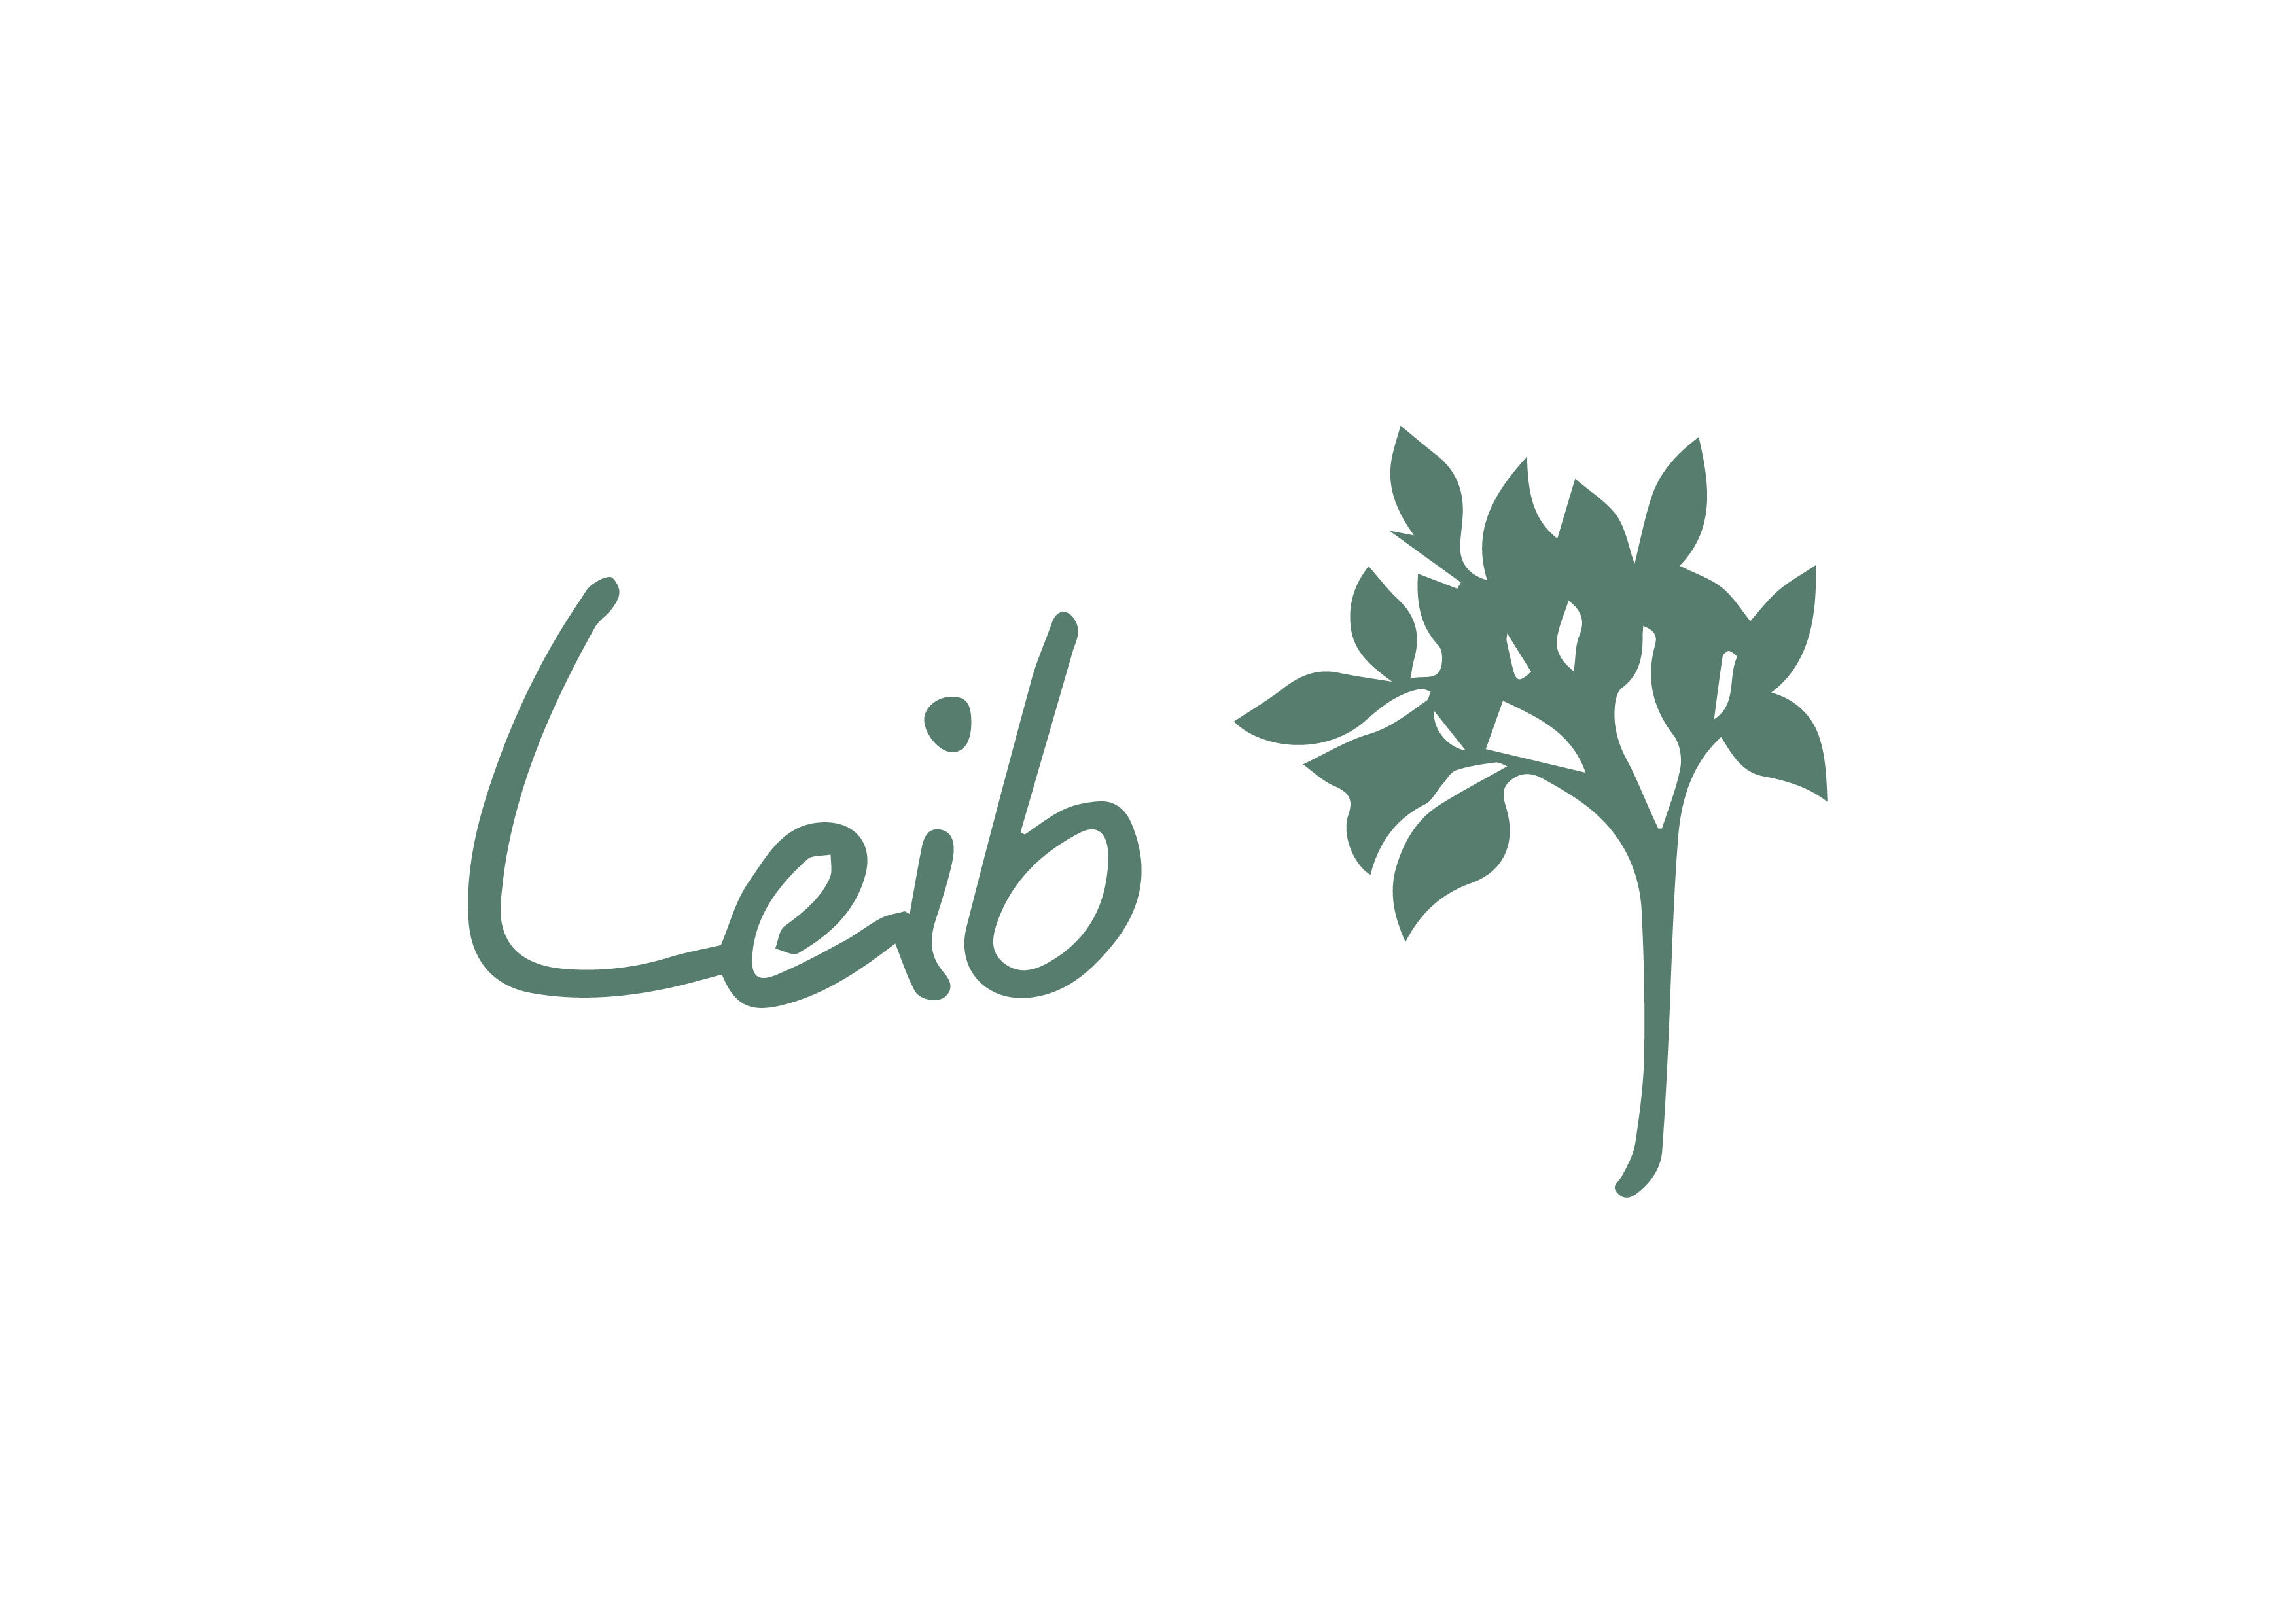 Leib-logo-1-green